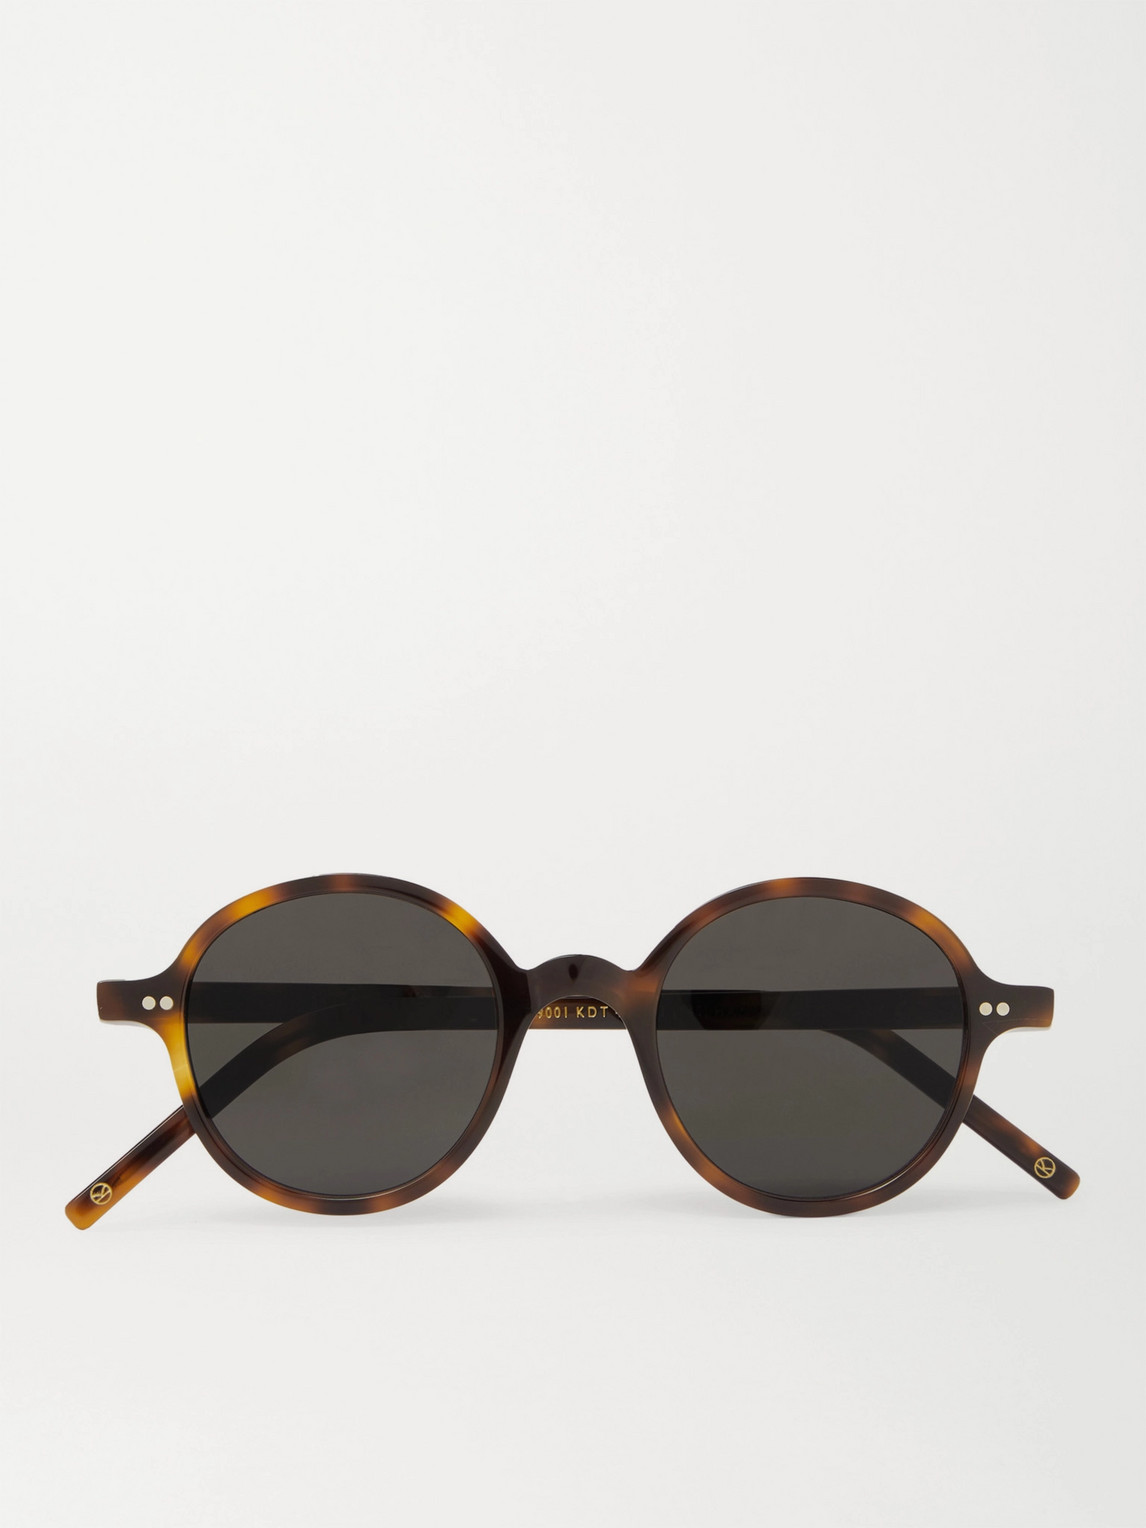 Kingsman Cutler And Gross Round-frame Tortoiseshell Acetate Sunglasses